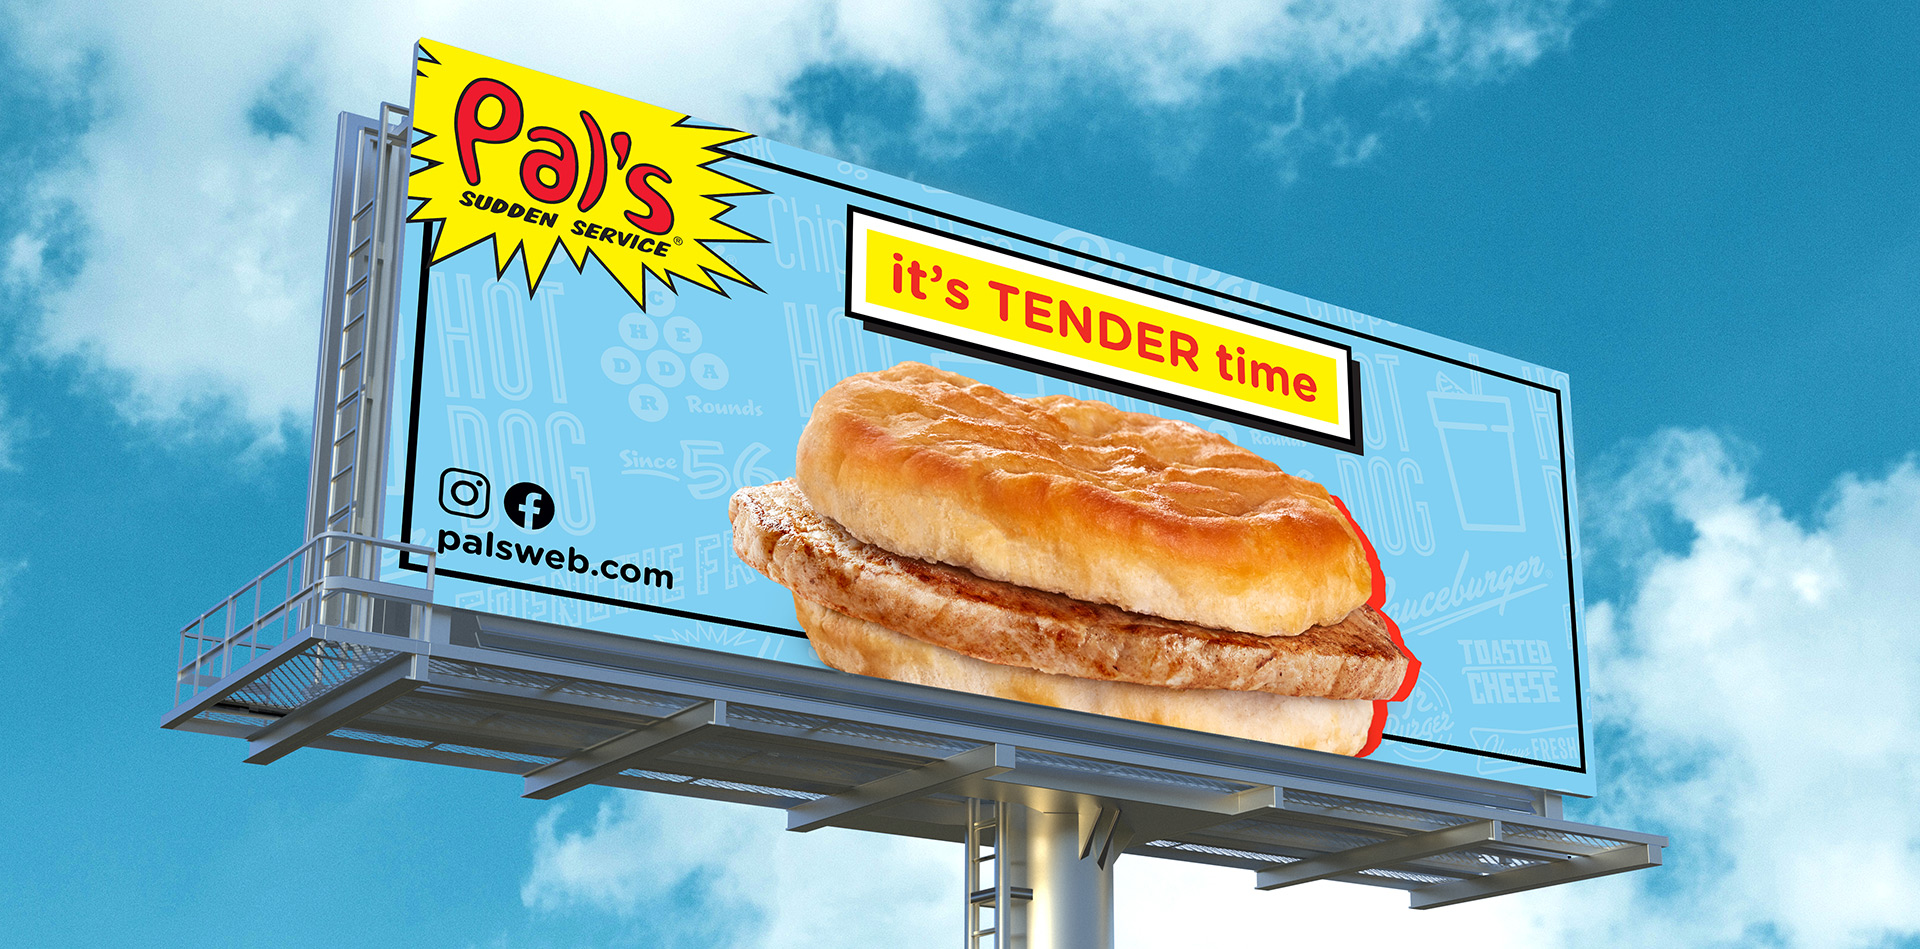 Pal's Tender Pork Loin Billboard